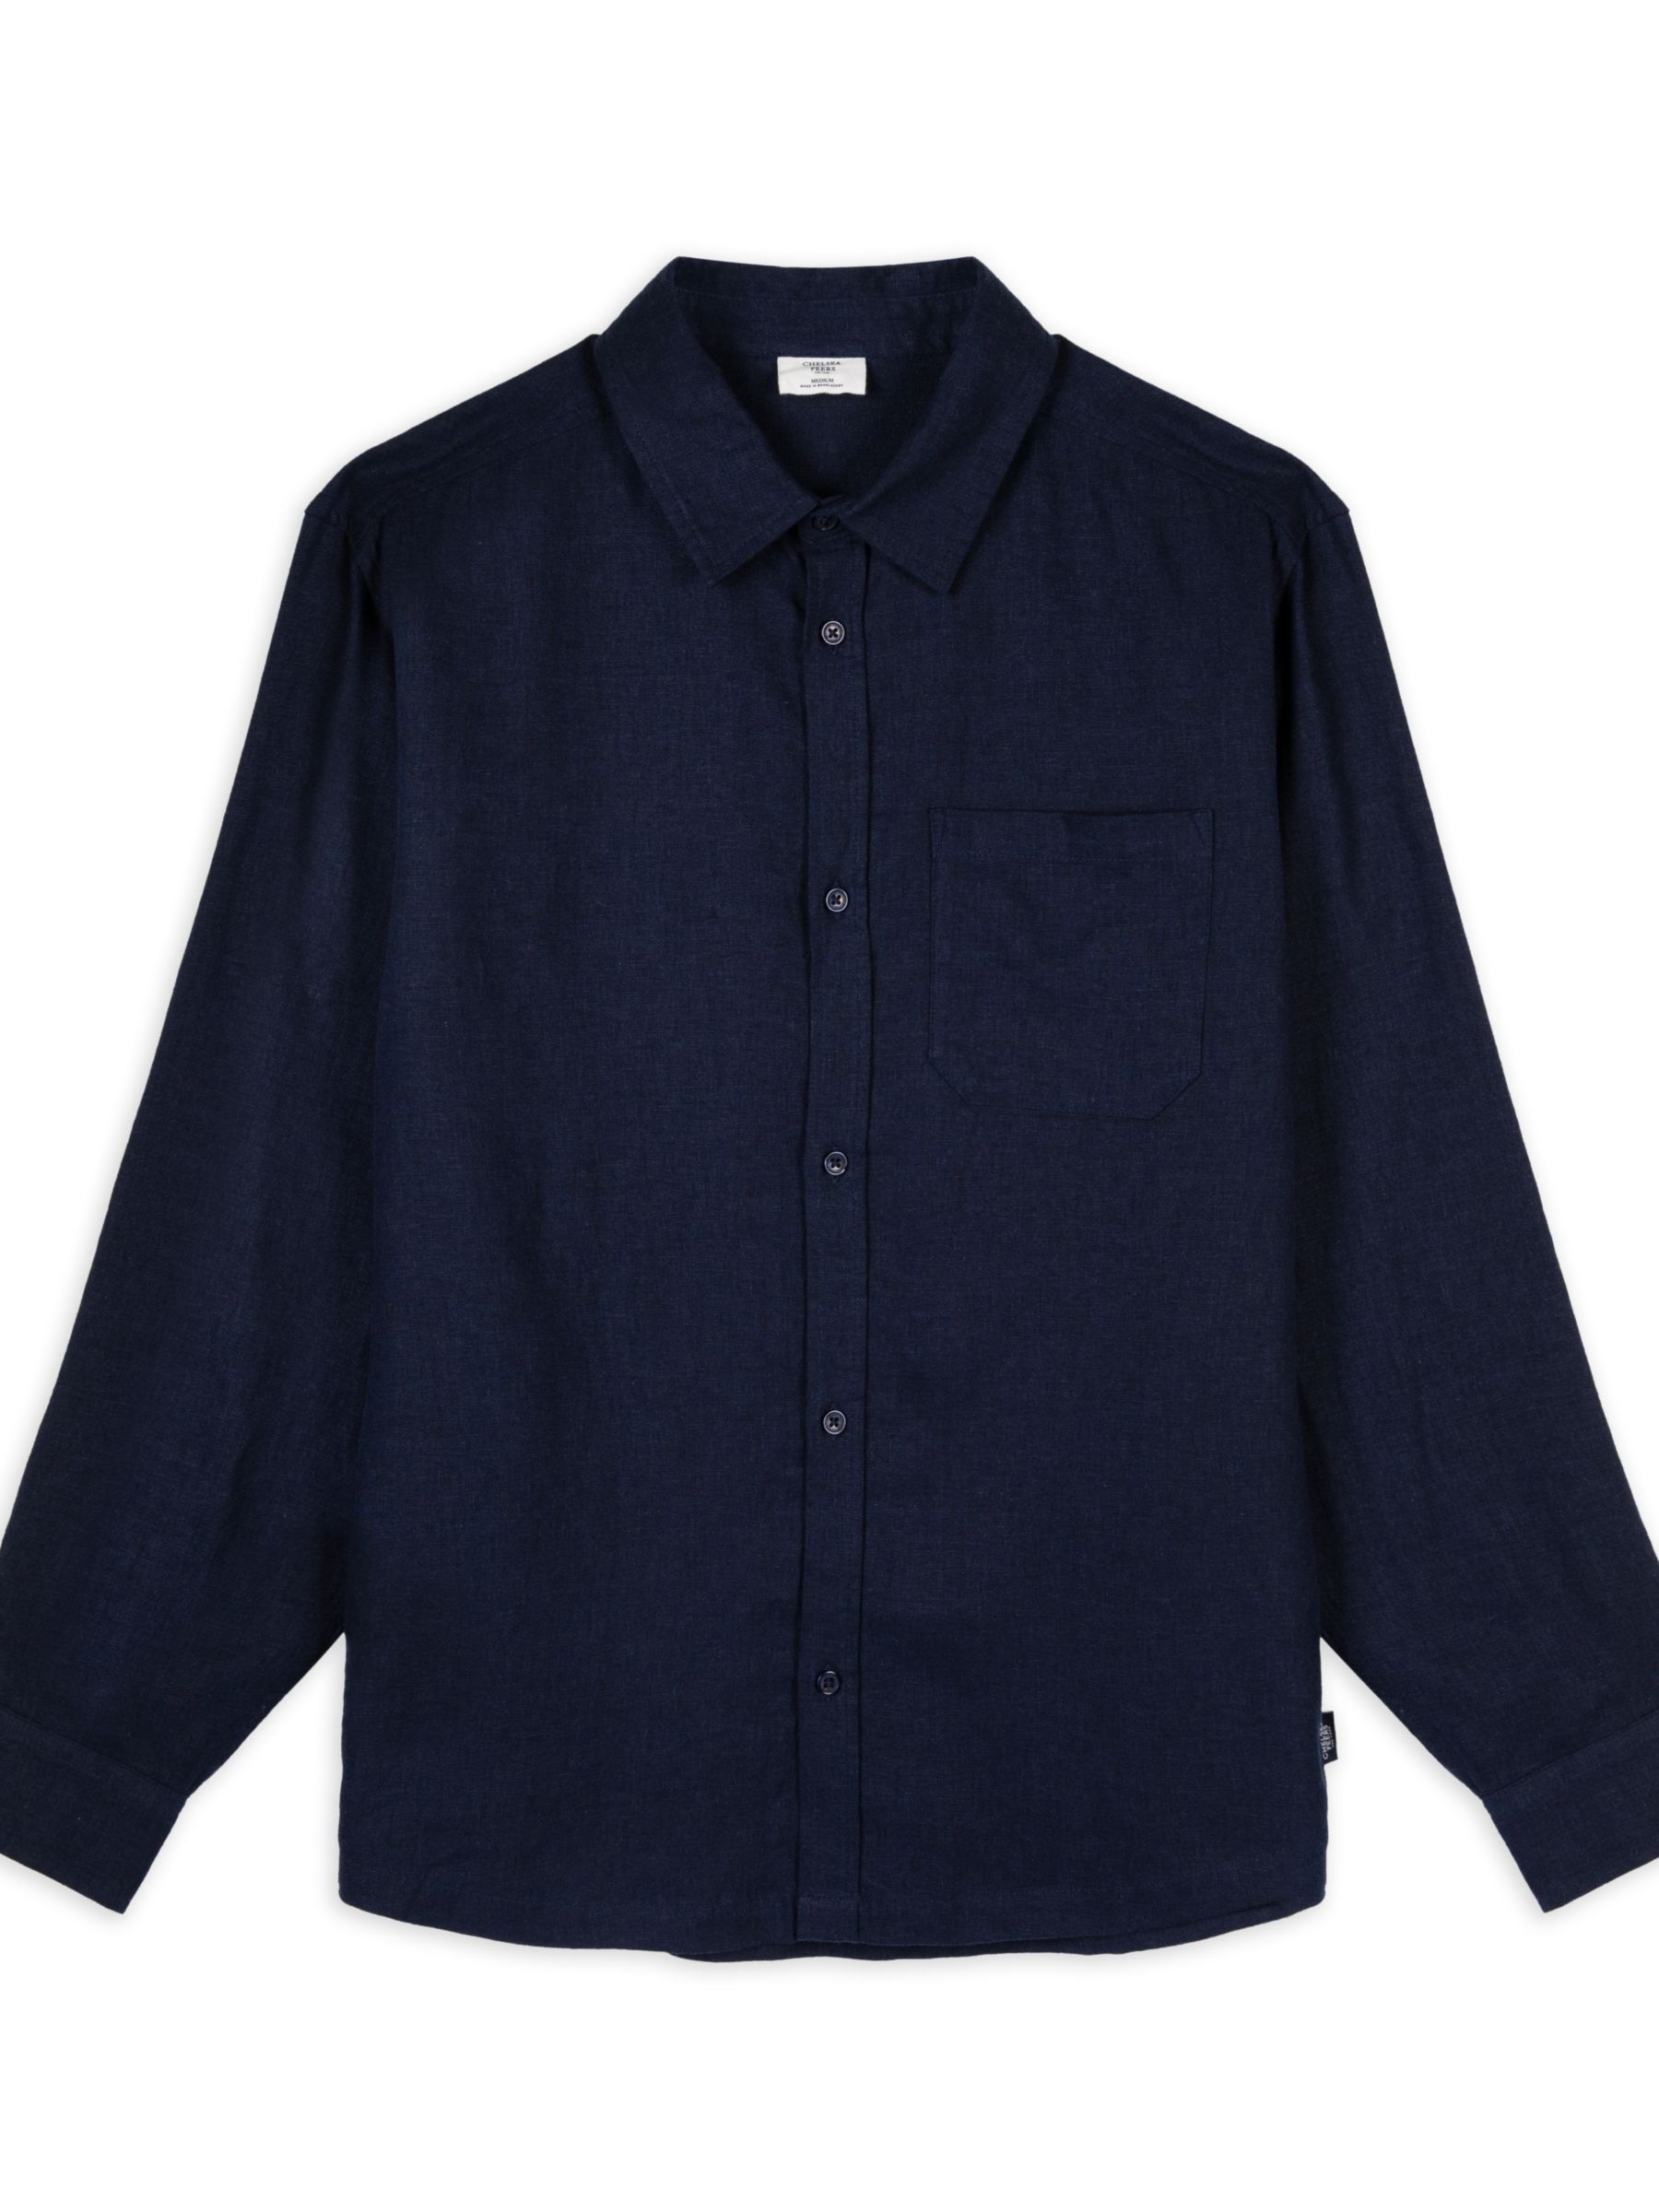 Chelsea Peers Linen Blend Long Sleeve Shirt, Navy, S